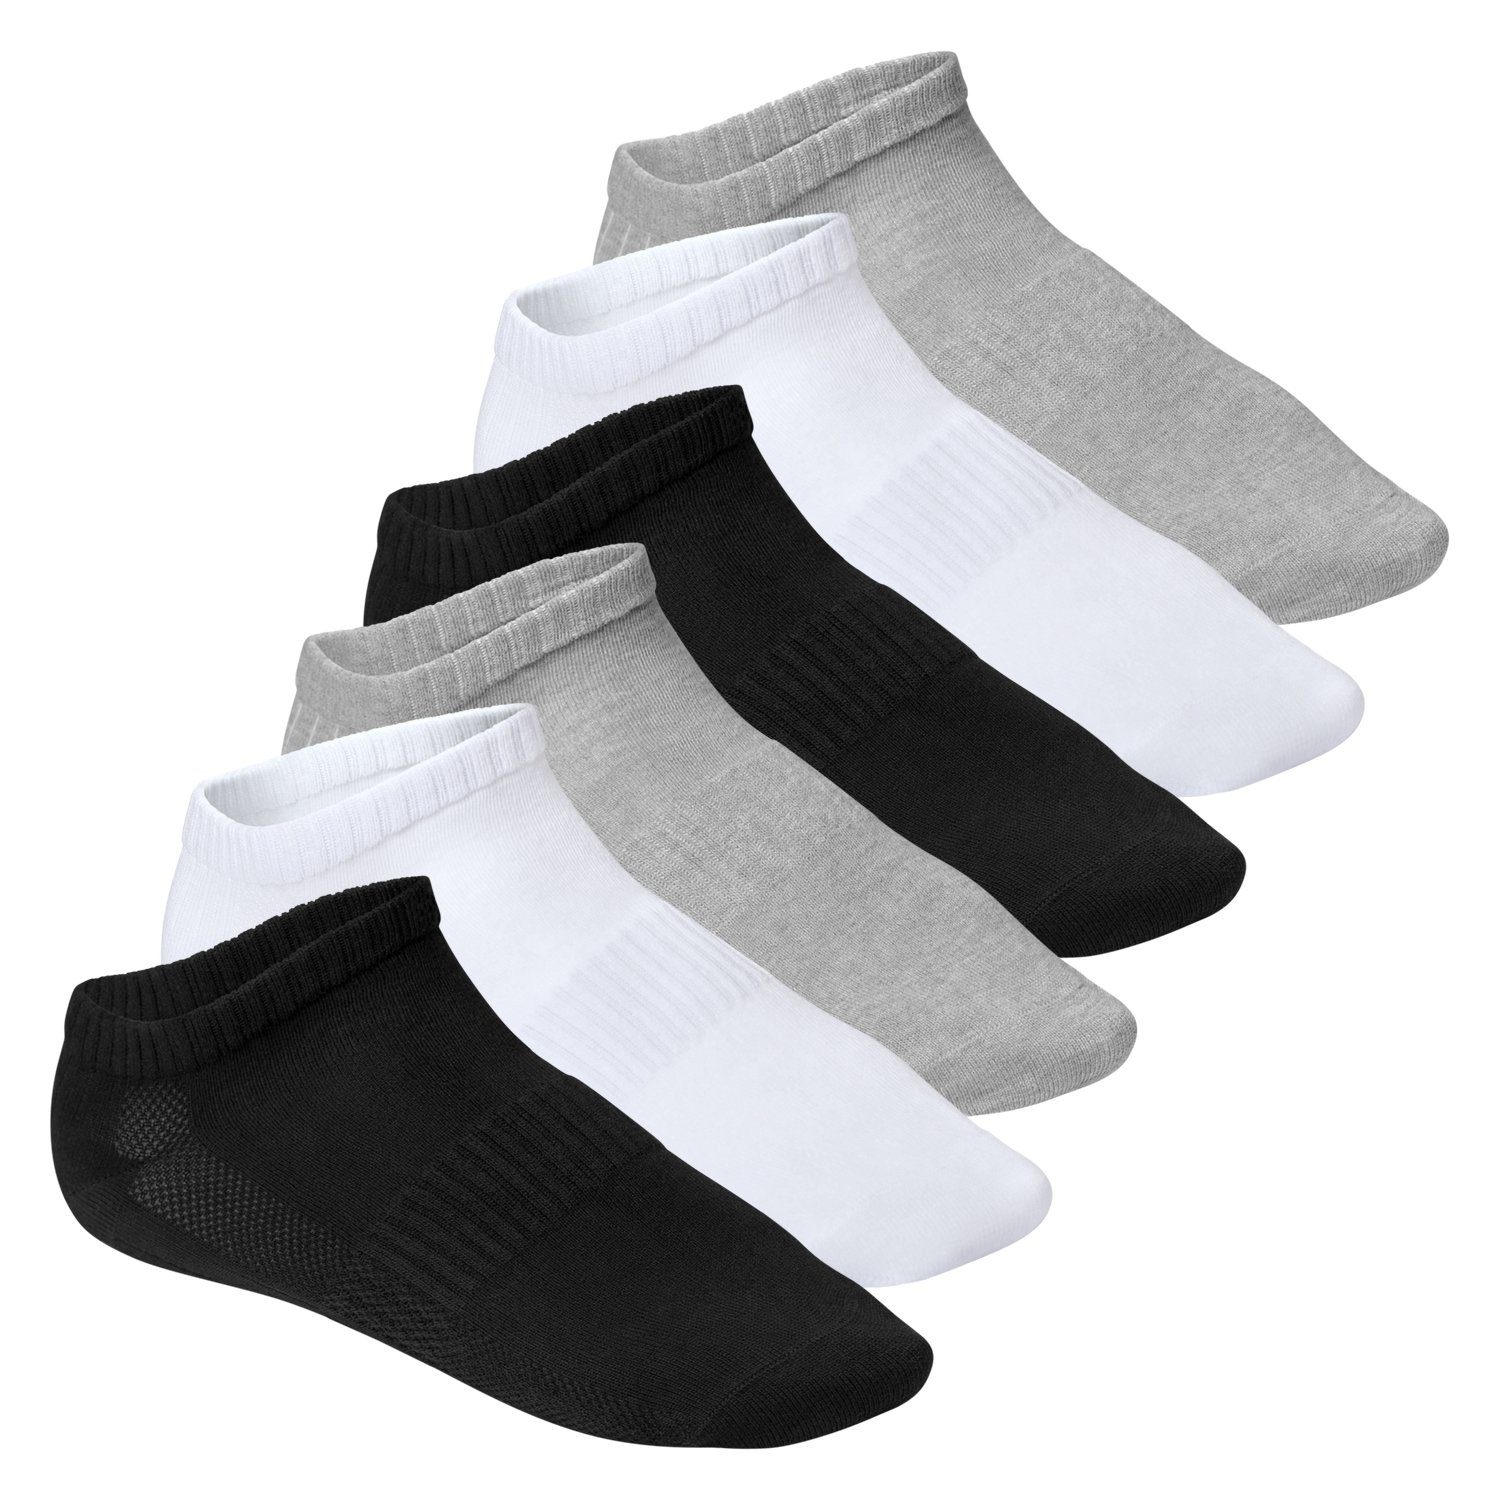 Footstar Füßlinge Damen & Herren Fitness Sneaker Socken (6 Paar) Mesh-Strick Black / Grey / White